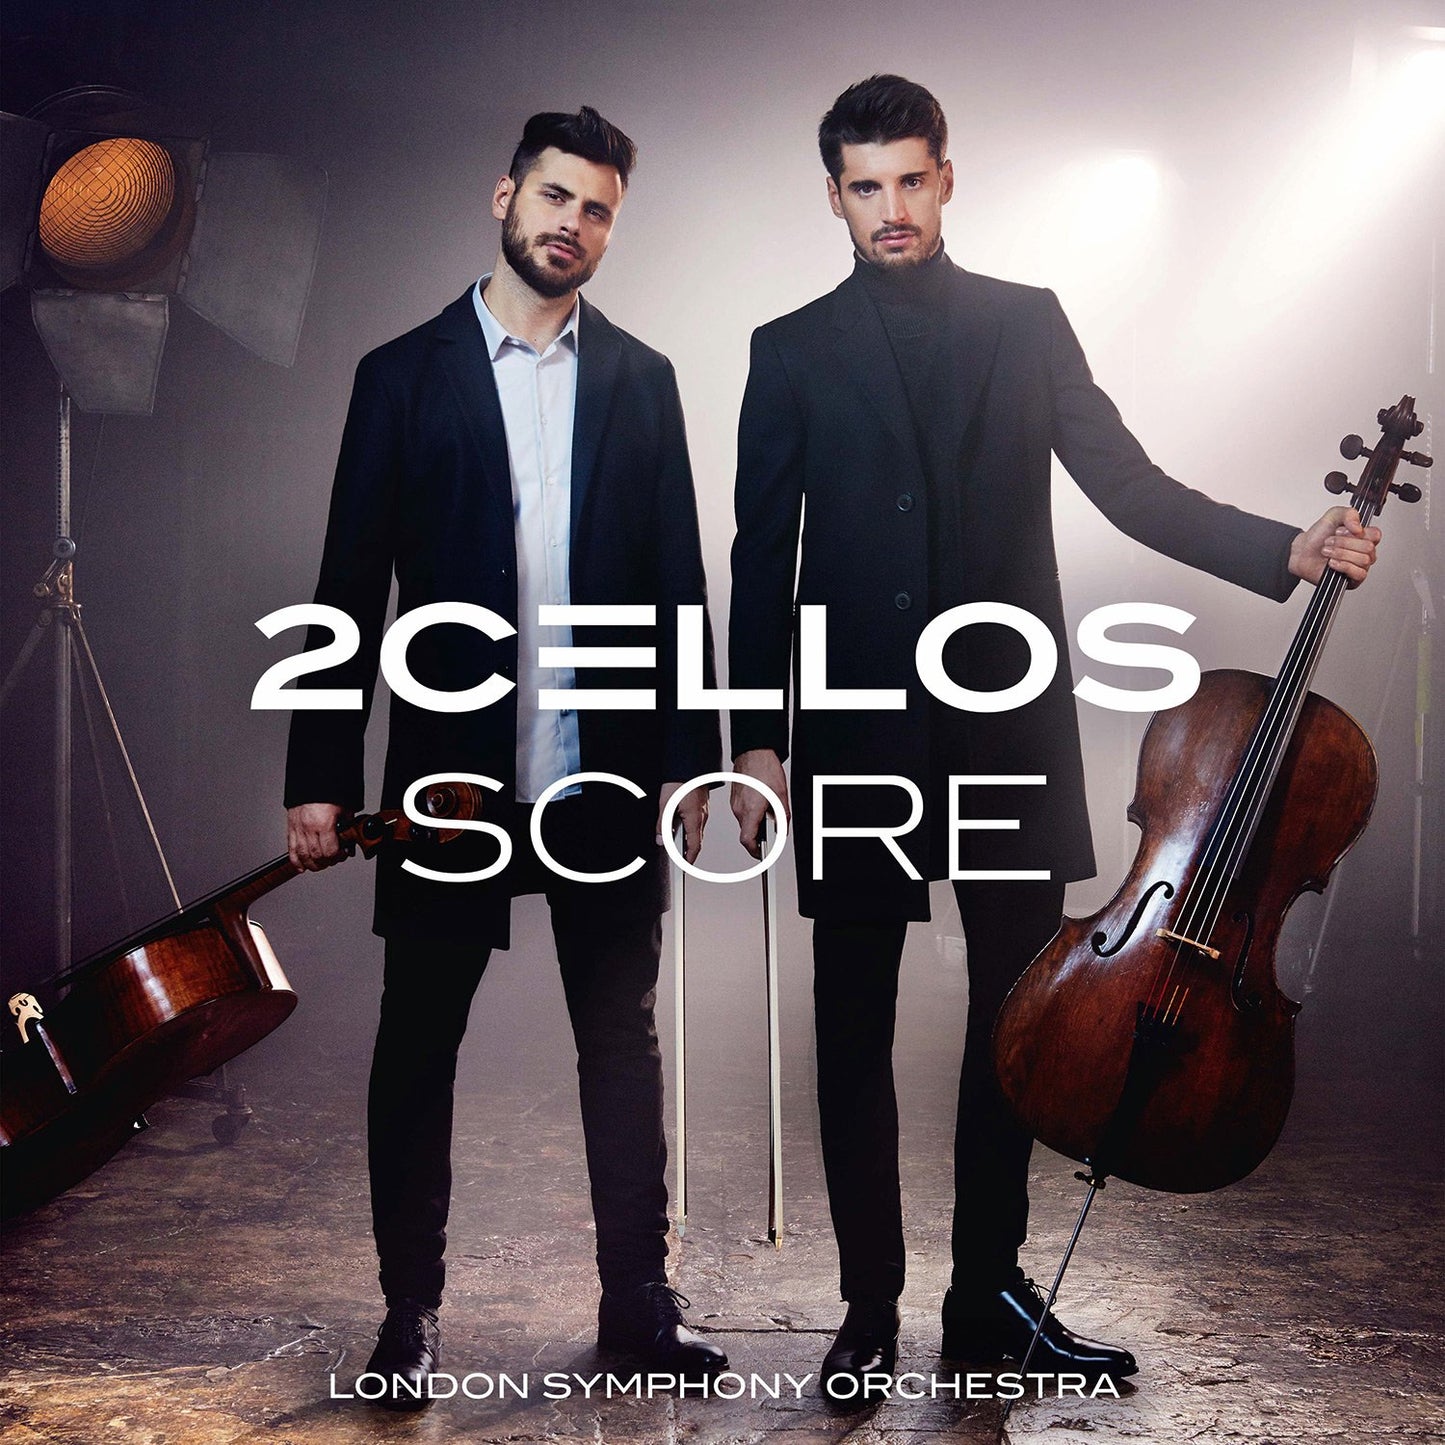 2 Cellos - Score - Music On Vinyl LP